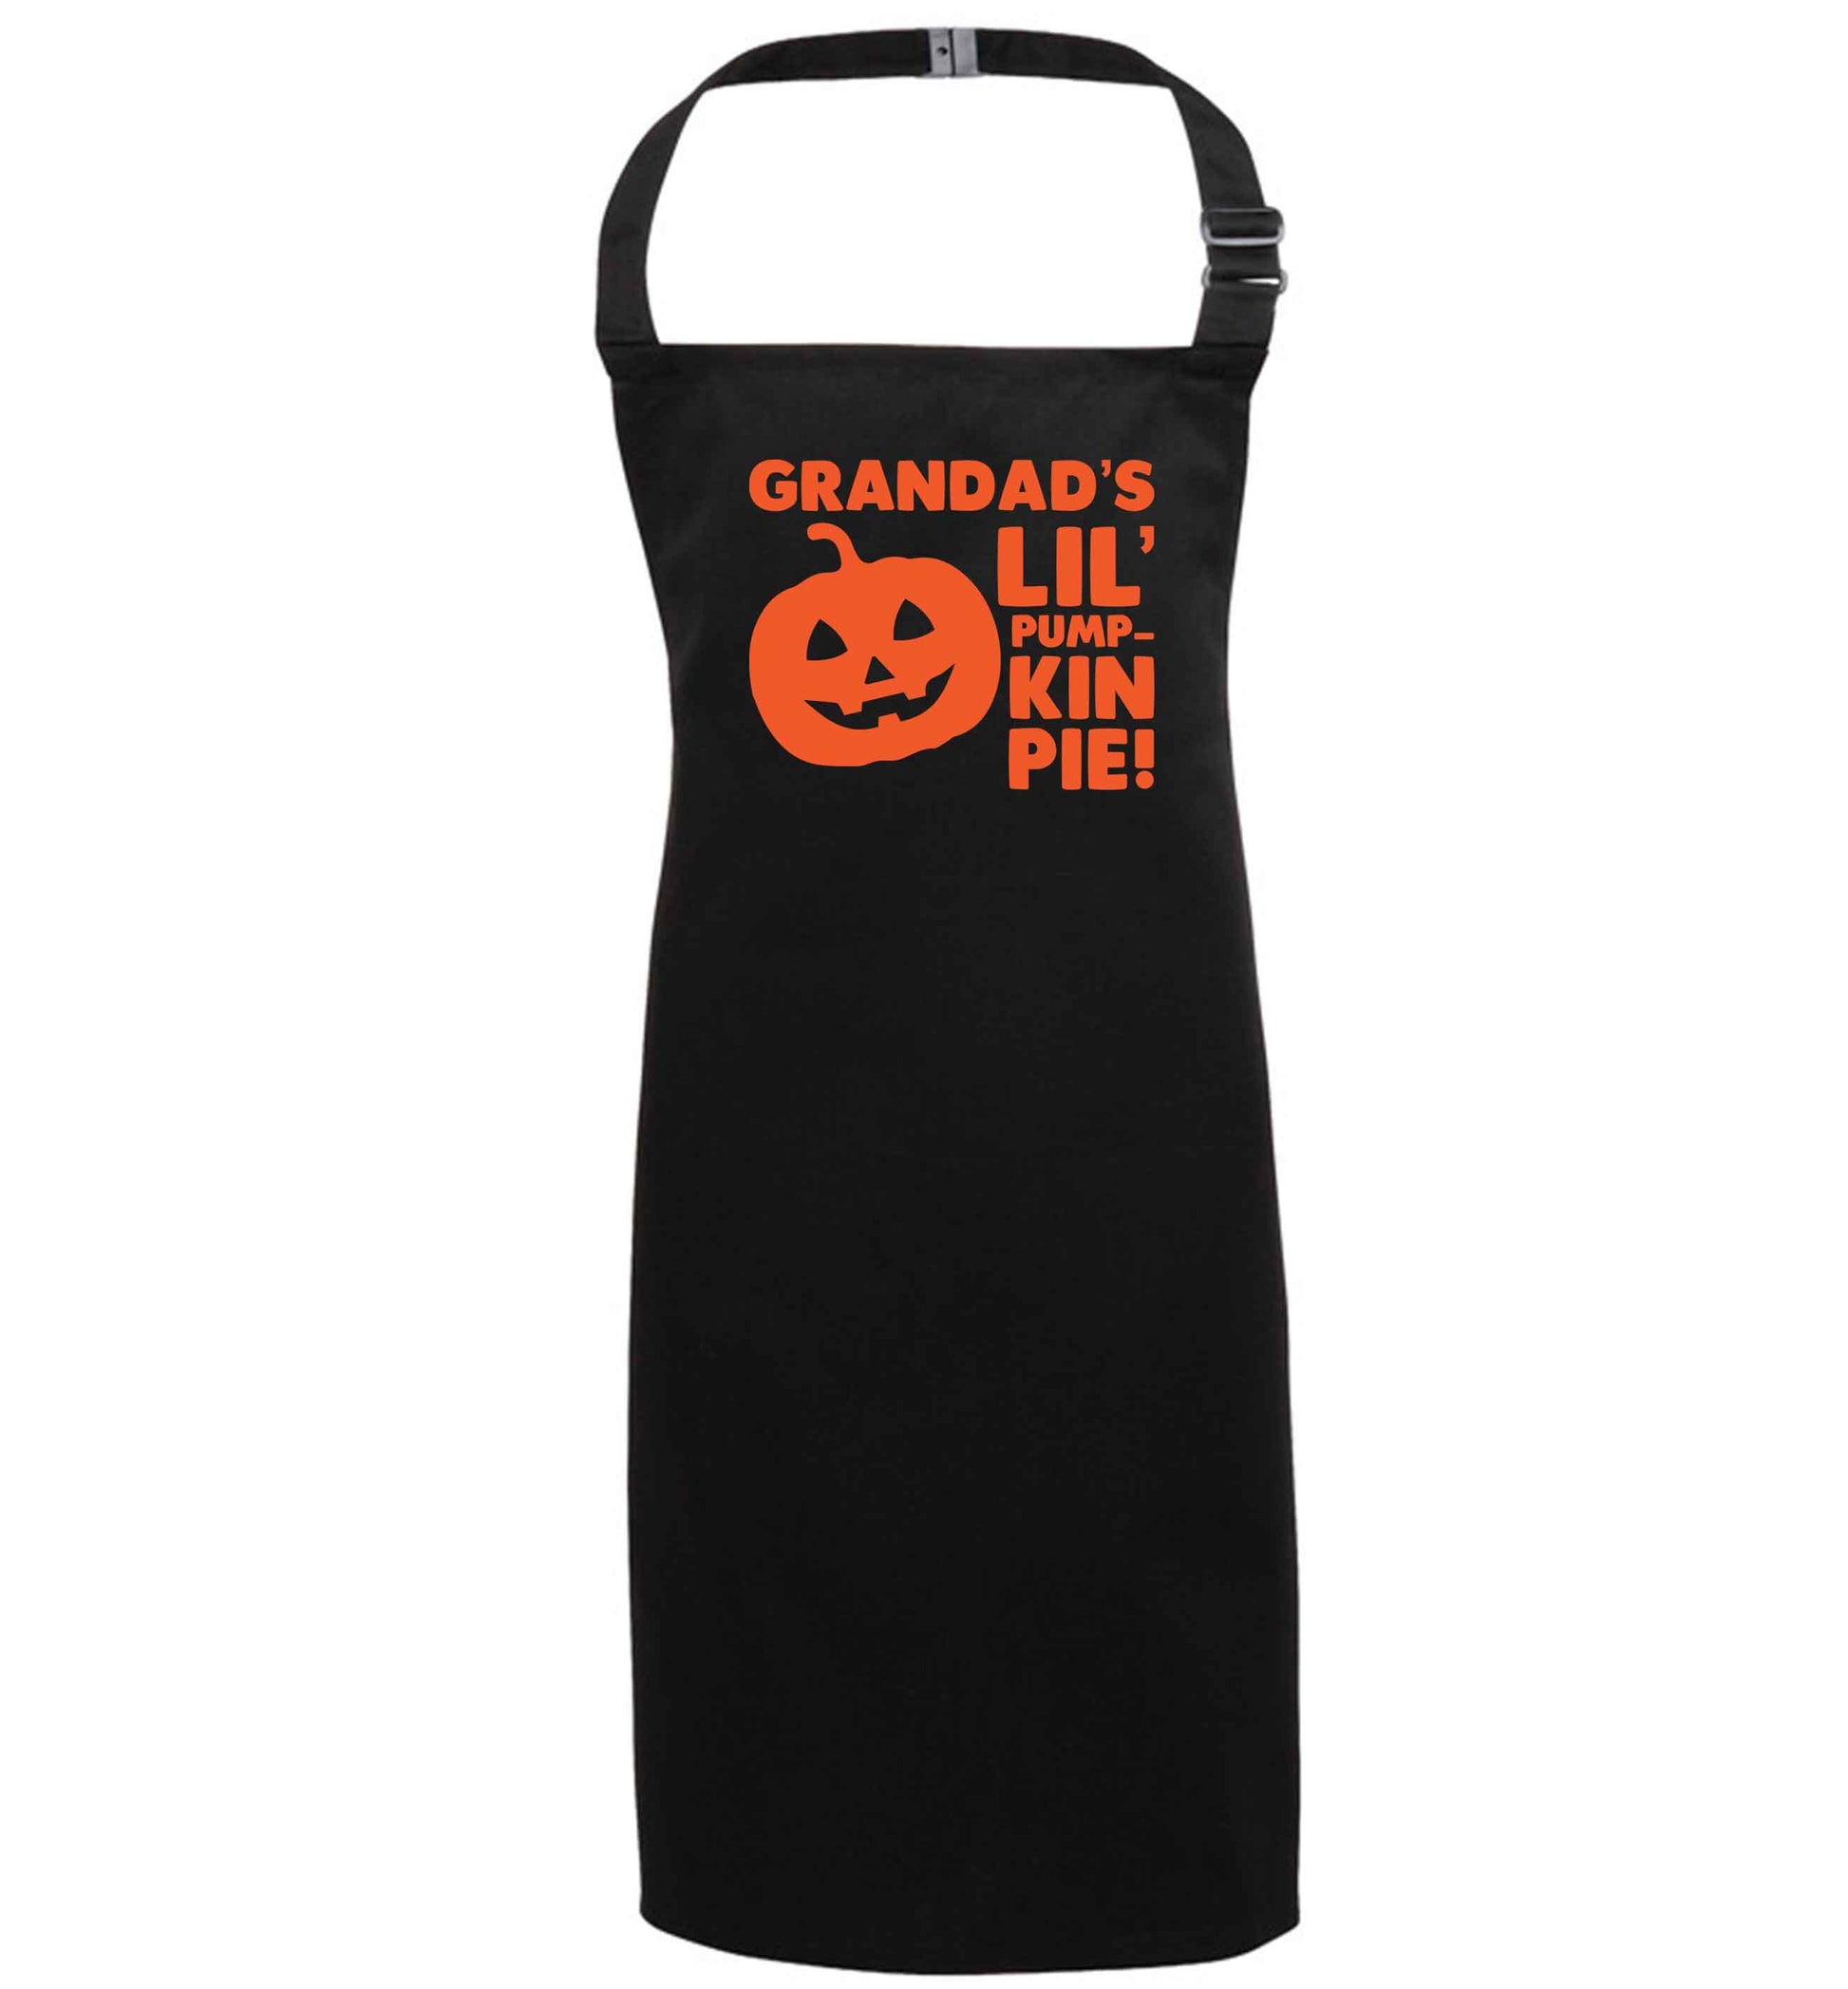 Grandad's lil' pumpkin pie black apron 7-10 years